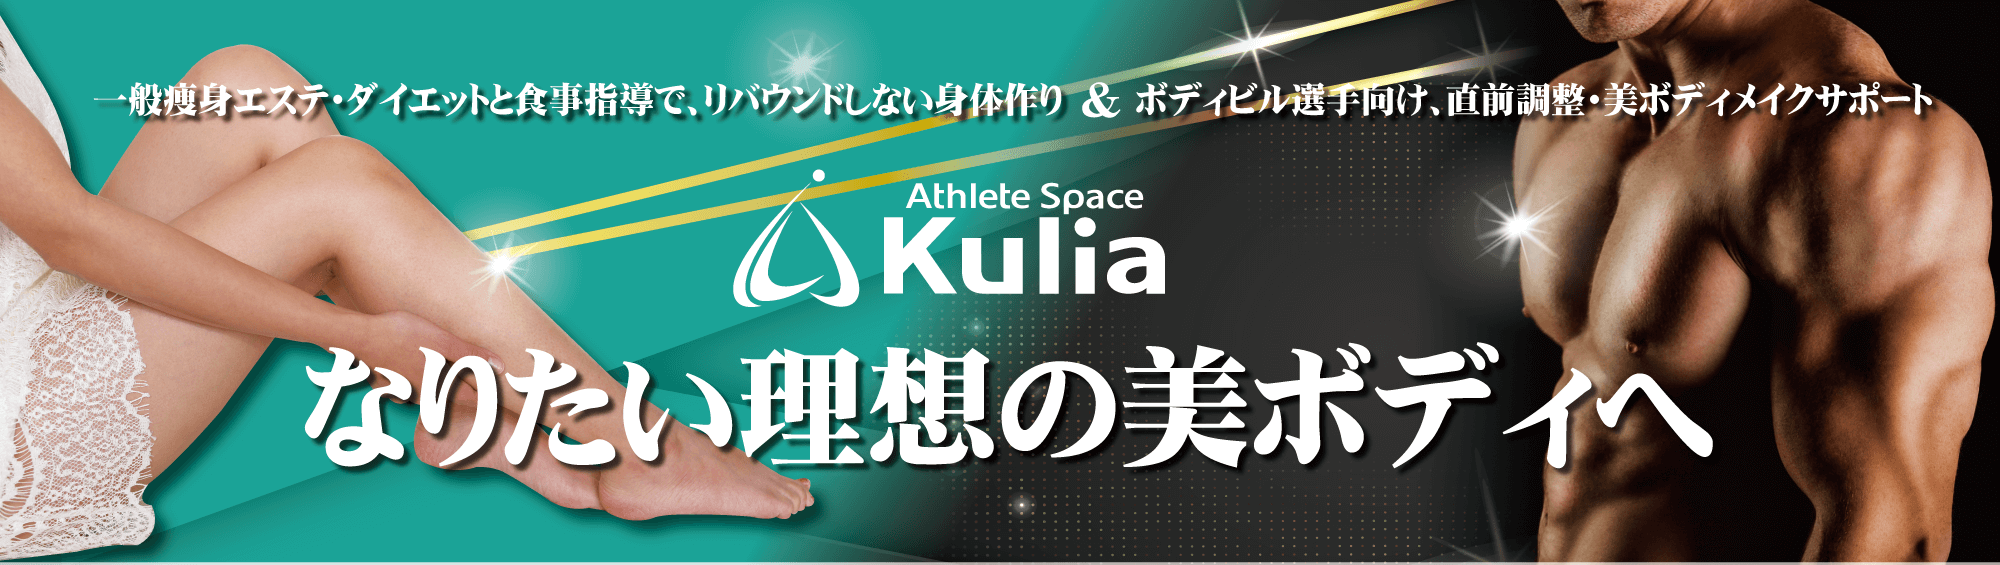 Athlete space Kulia